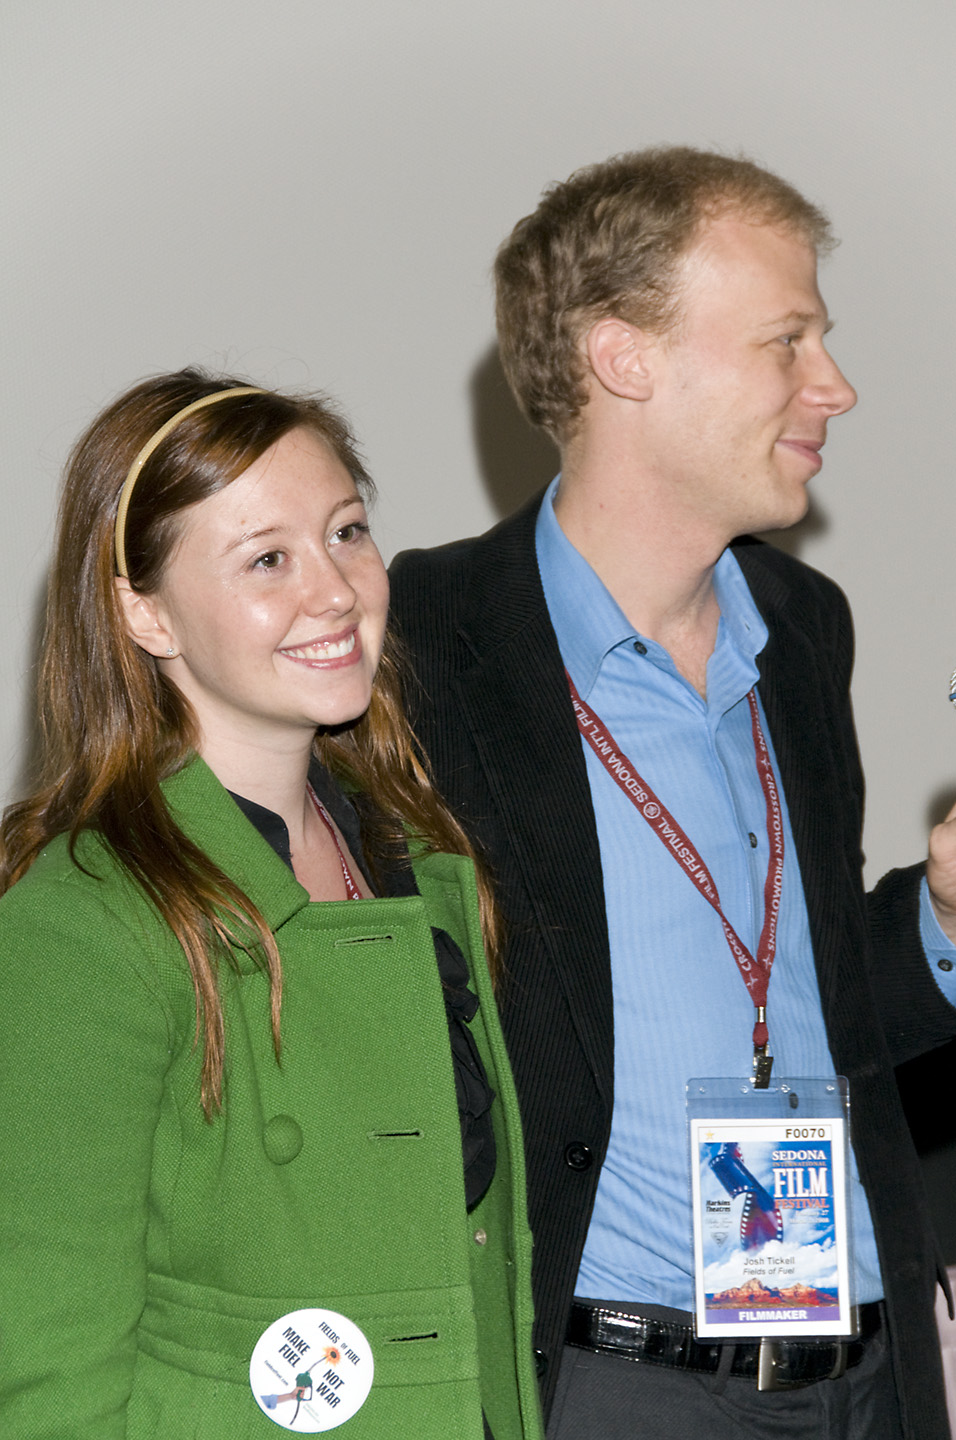 Rebecca and Josh Tickell, Best Documentary at the Sedona Film Festival 2008